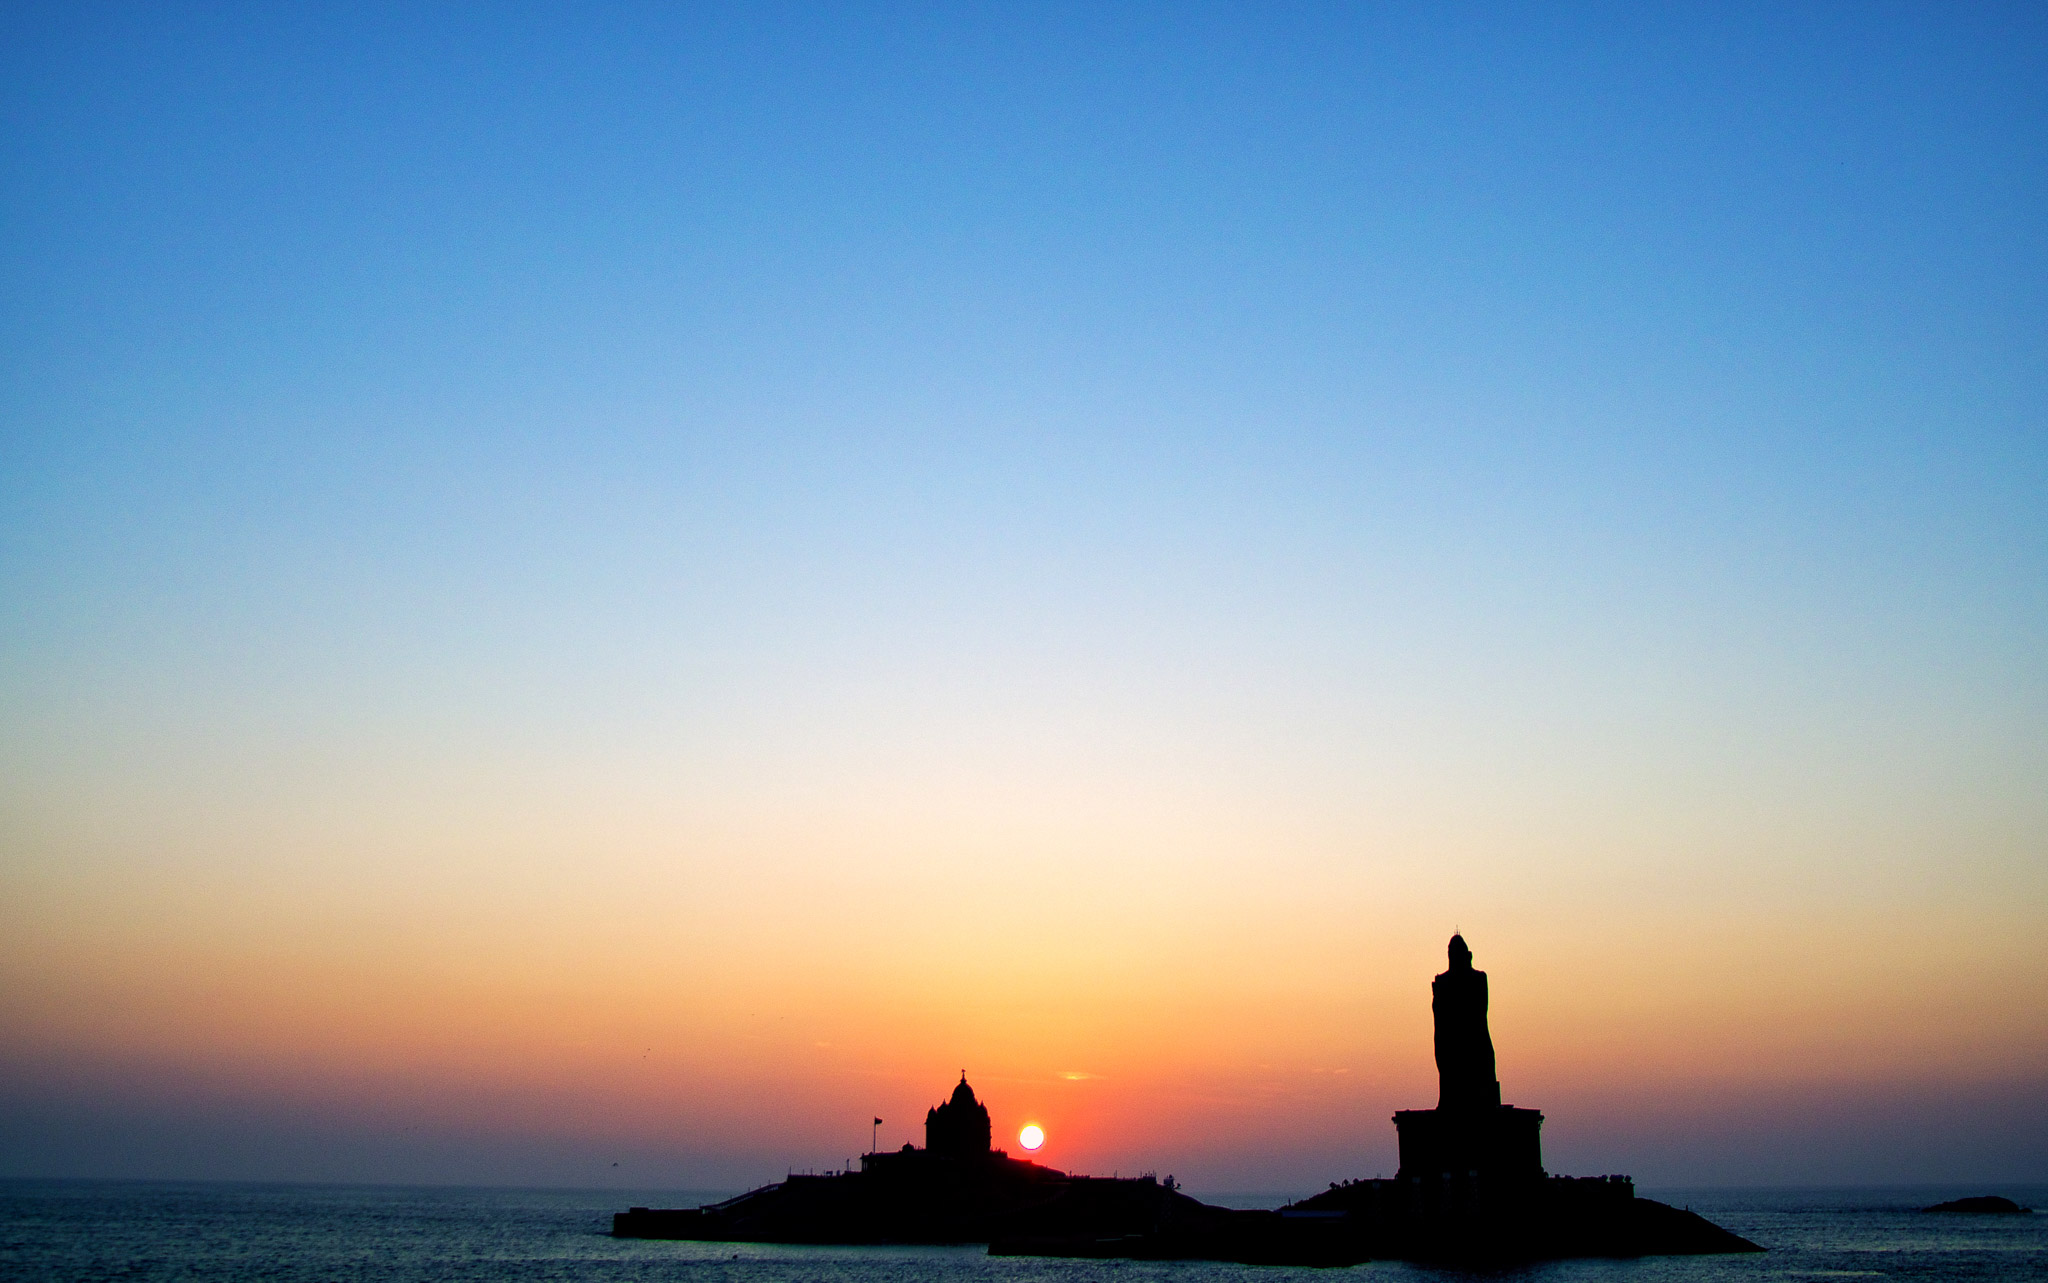 Sunrise over the confluence of three oceans (Bay of Bengal, Arabian Sea and Indian Ocean) behind the Thiruvalluvar Statue and Vivekananda rock, Kanyakumari, Tamil Nadu, India